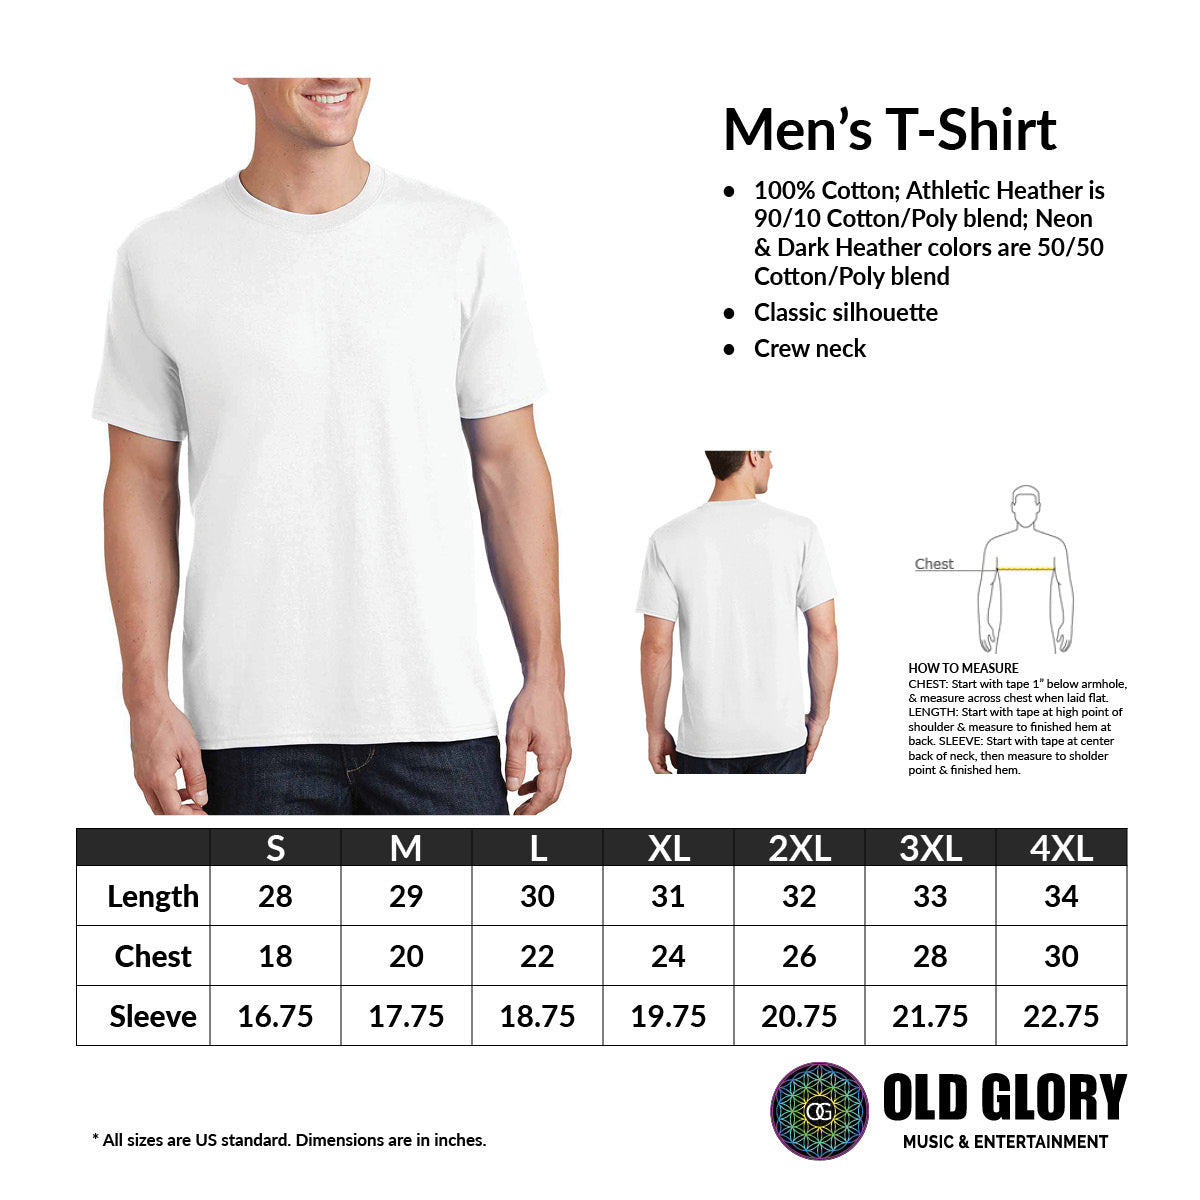 Mtr St. Louis Spirits Basketball Men/Unisex T-Shirt, White / L